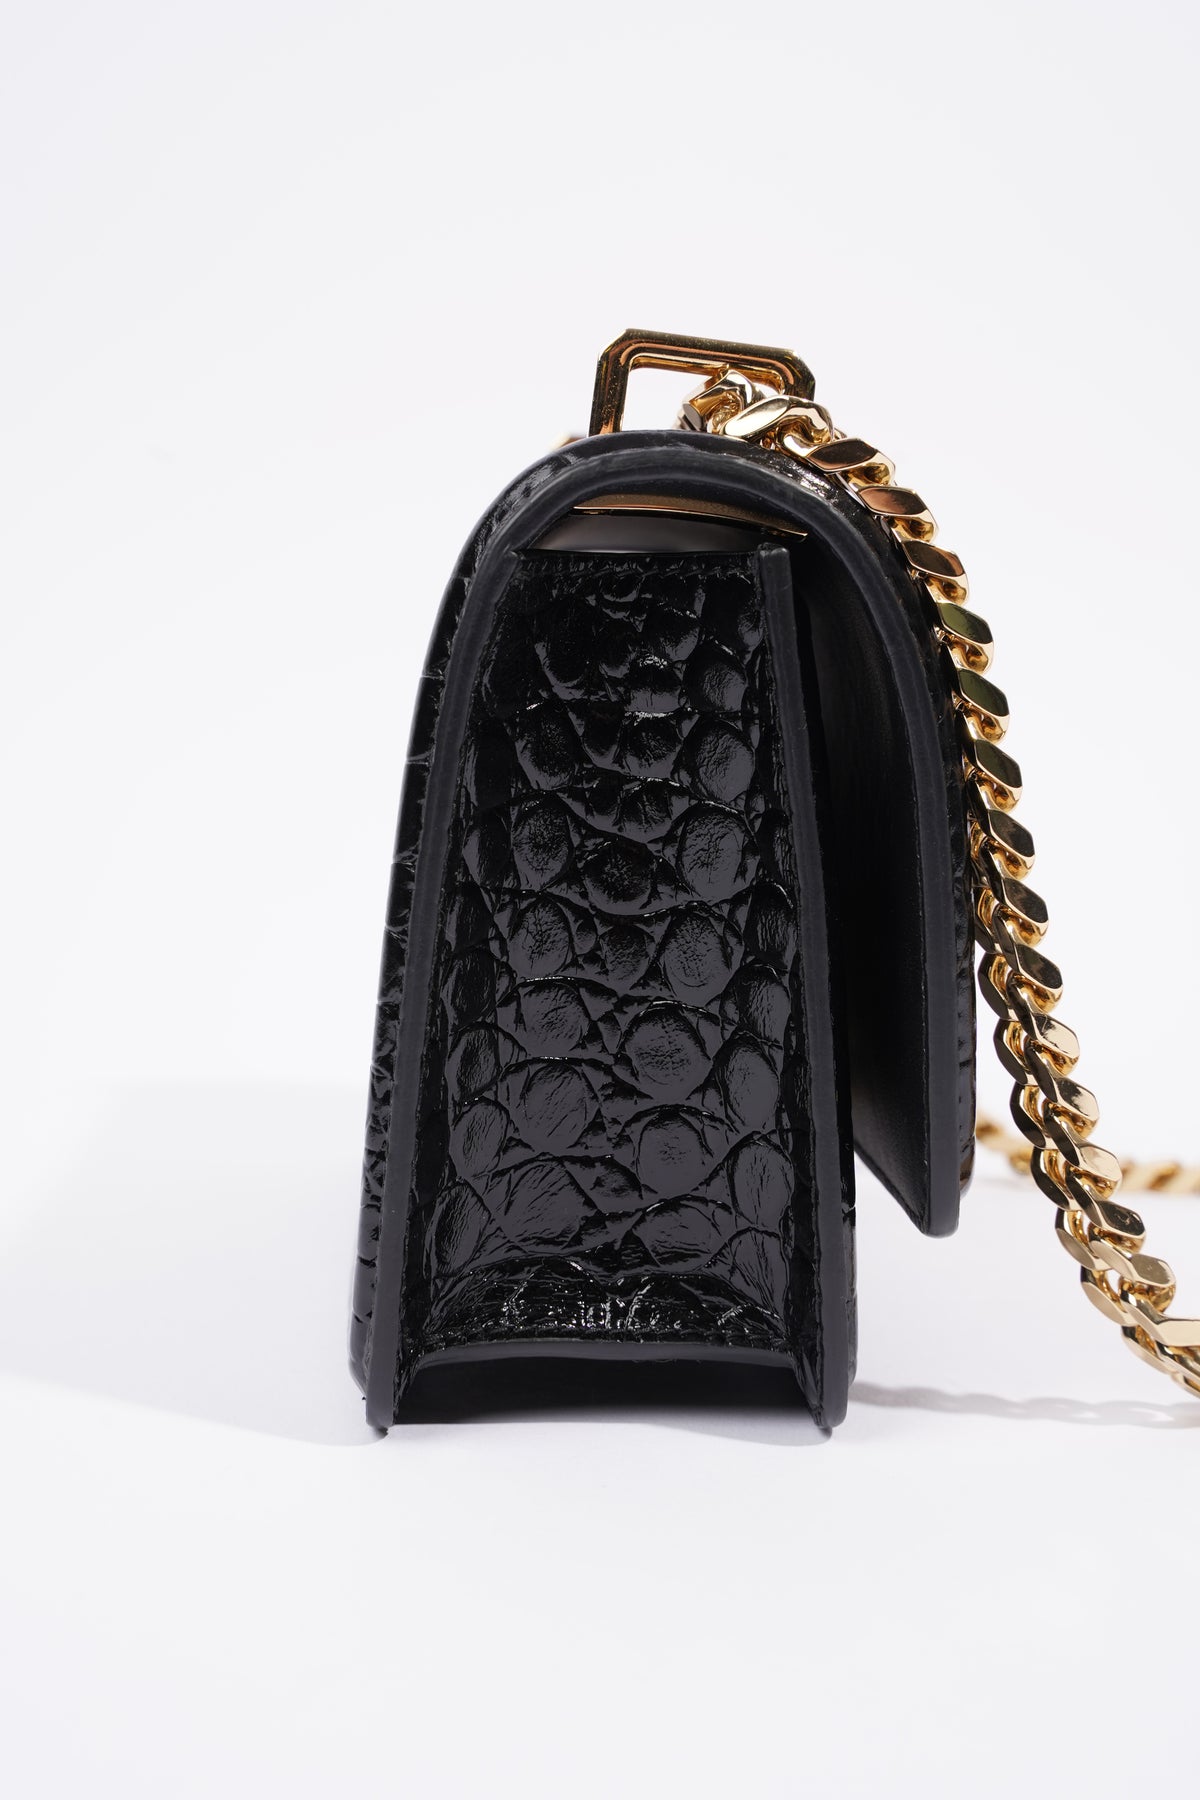 Tb bag leather handbag Burberry Black in Leather - 29610463